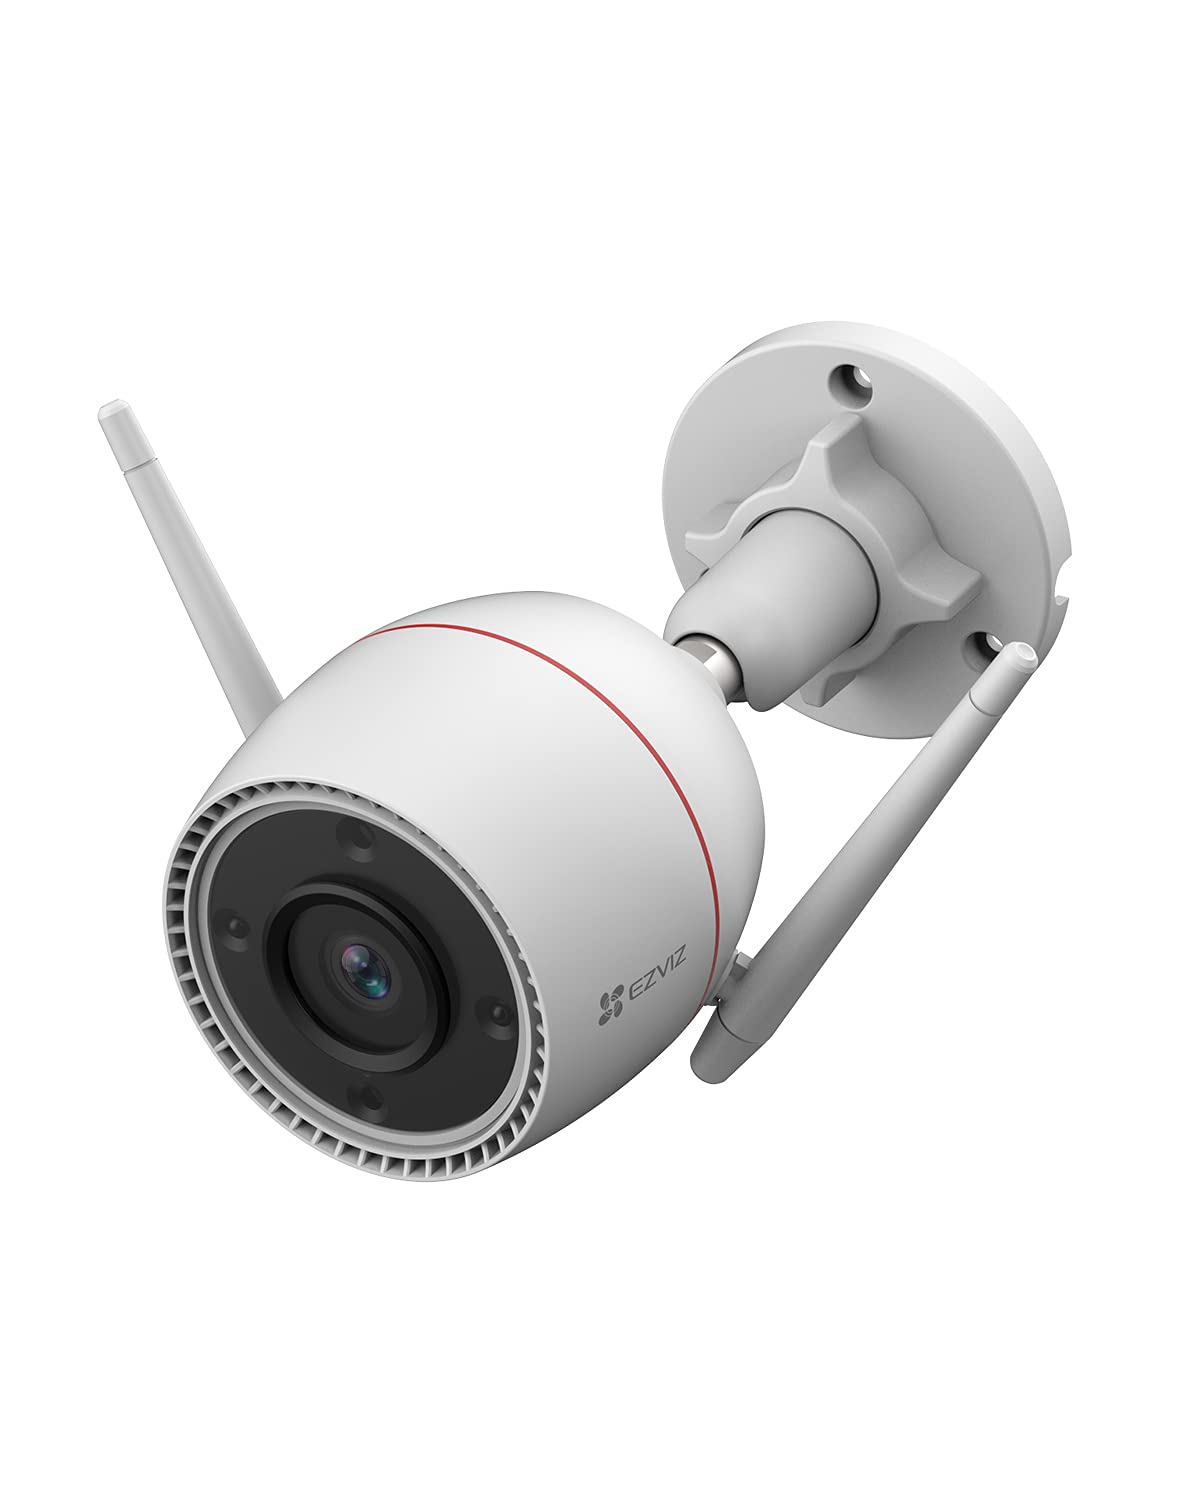 Outdoor Security Camera Surveillance IP66 Weatherproof 100ft Night Vision Strobe Light & Siren Alarm 2.4G Wi-Fi/Wired Two-Way Audio Works